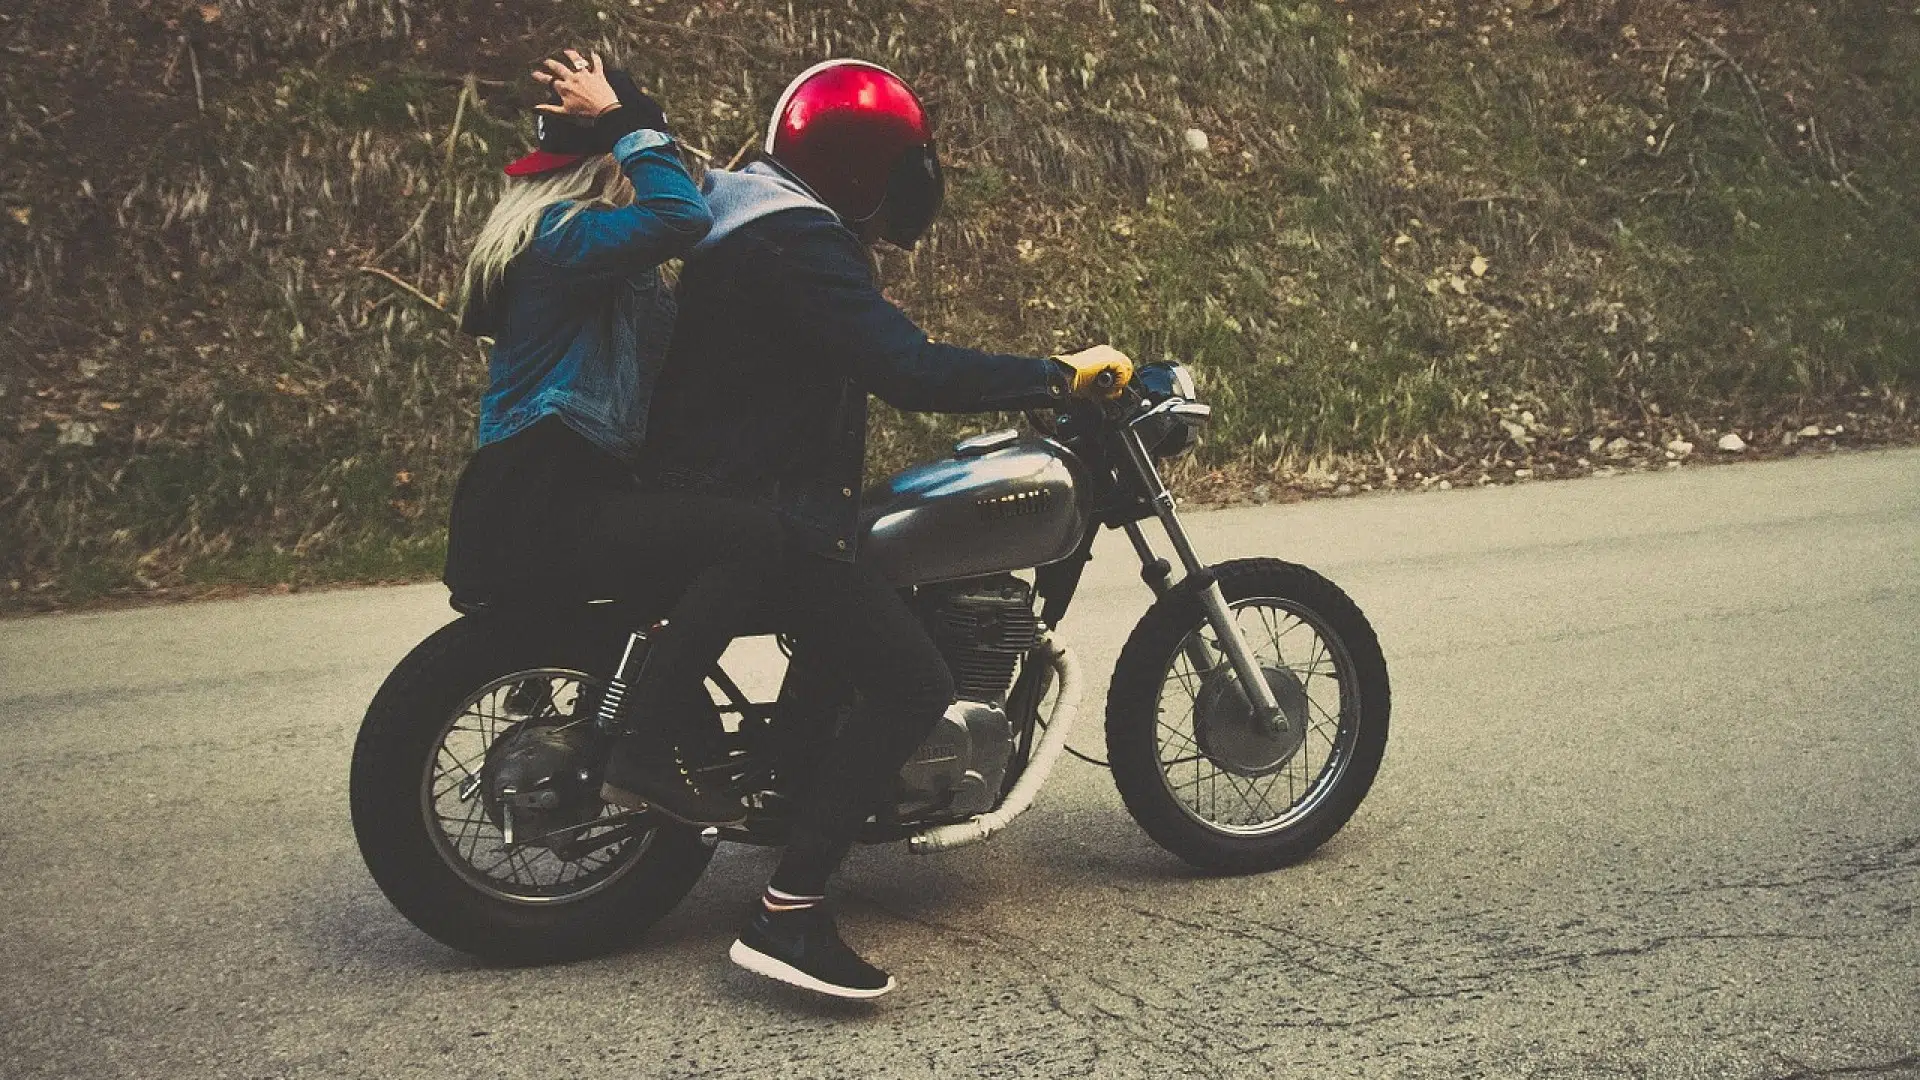 Casque de moto : pourquoi en porter ?